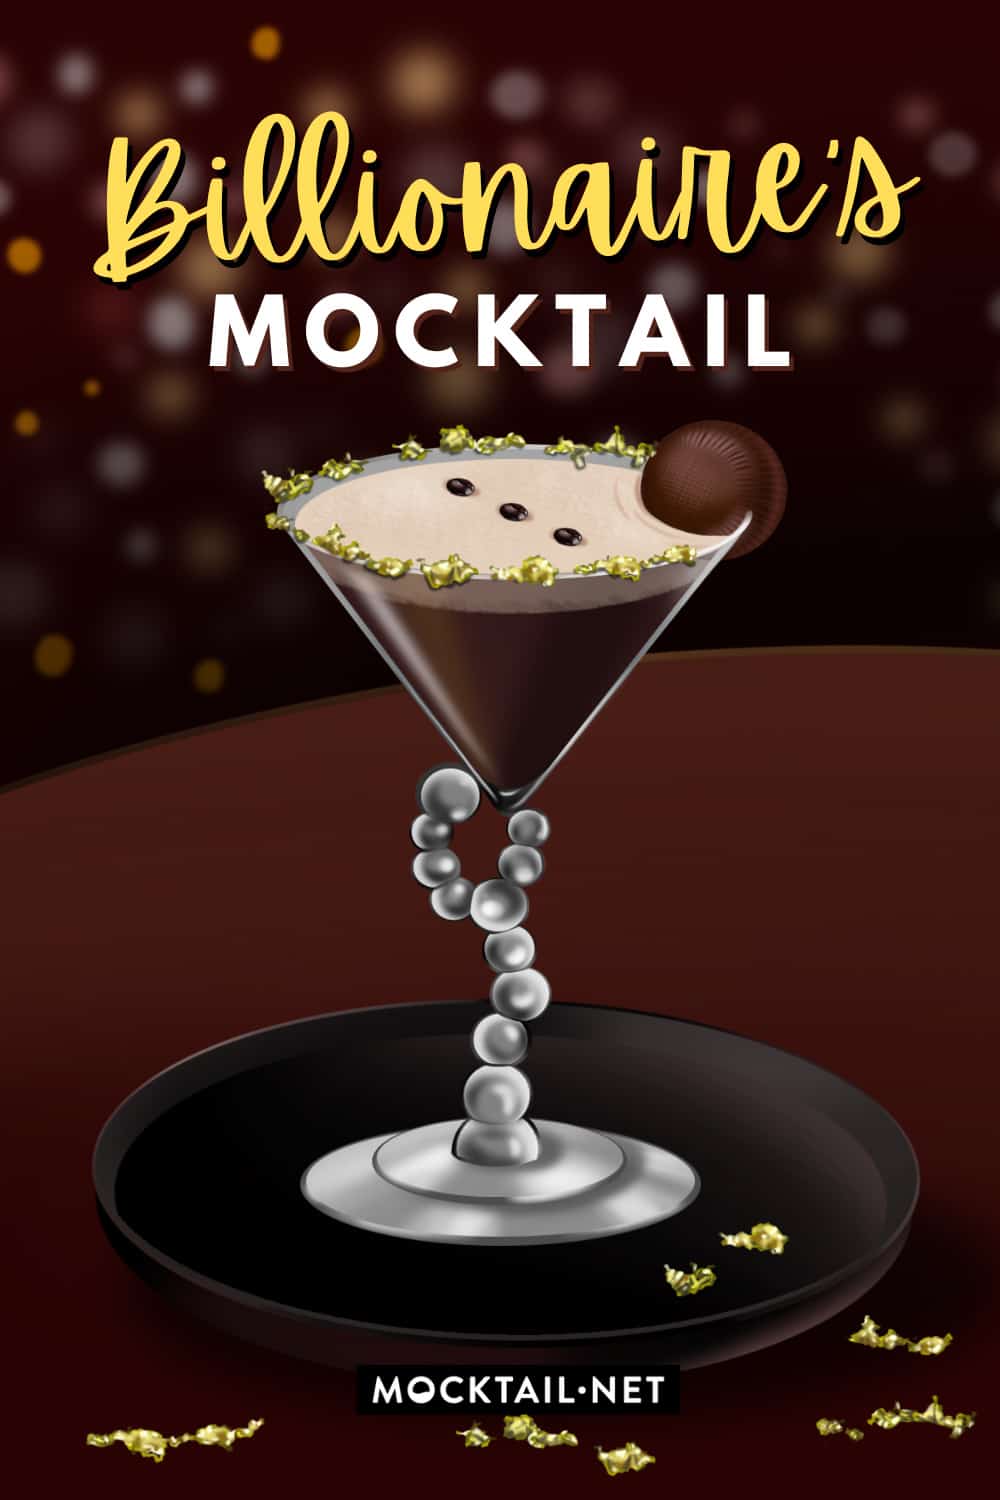 Billionaire’s Mocktail - The World’s Most Expensive Mocktail